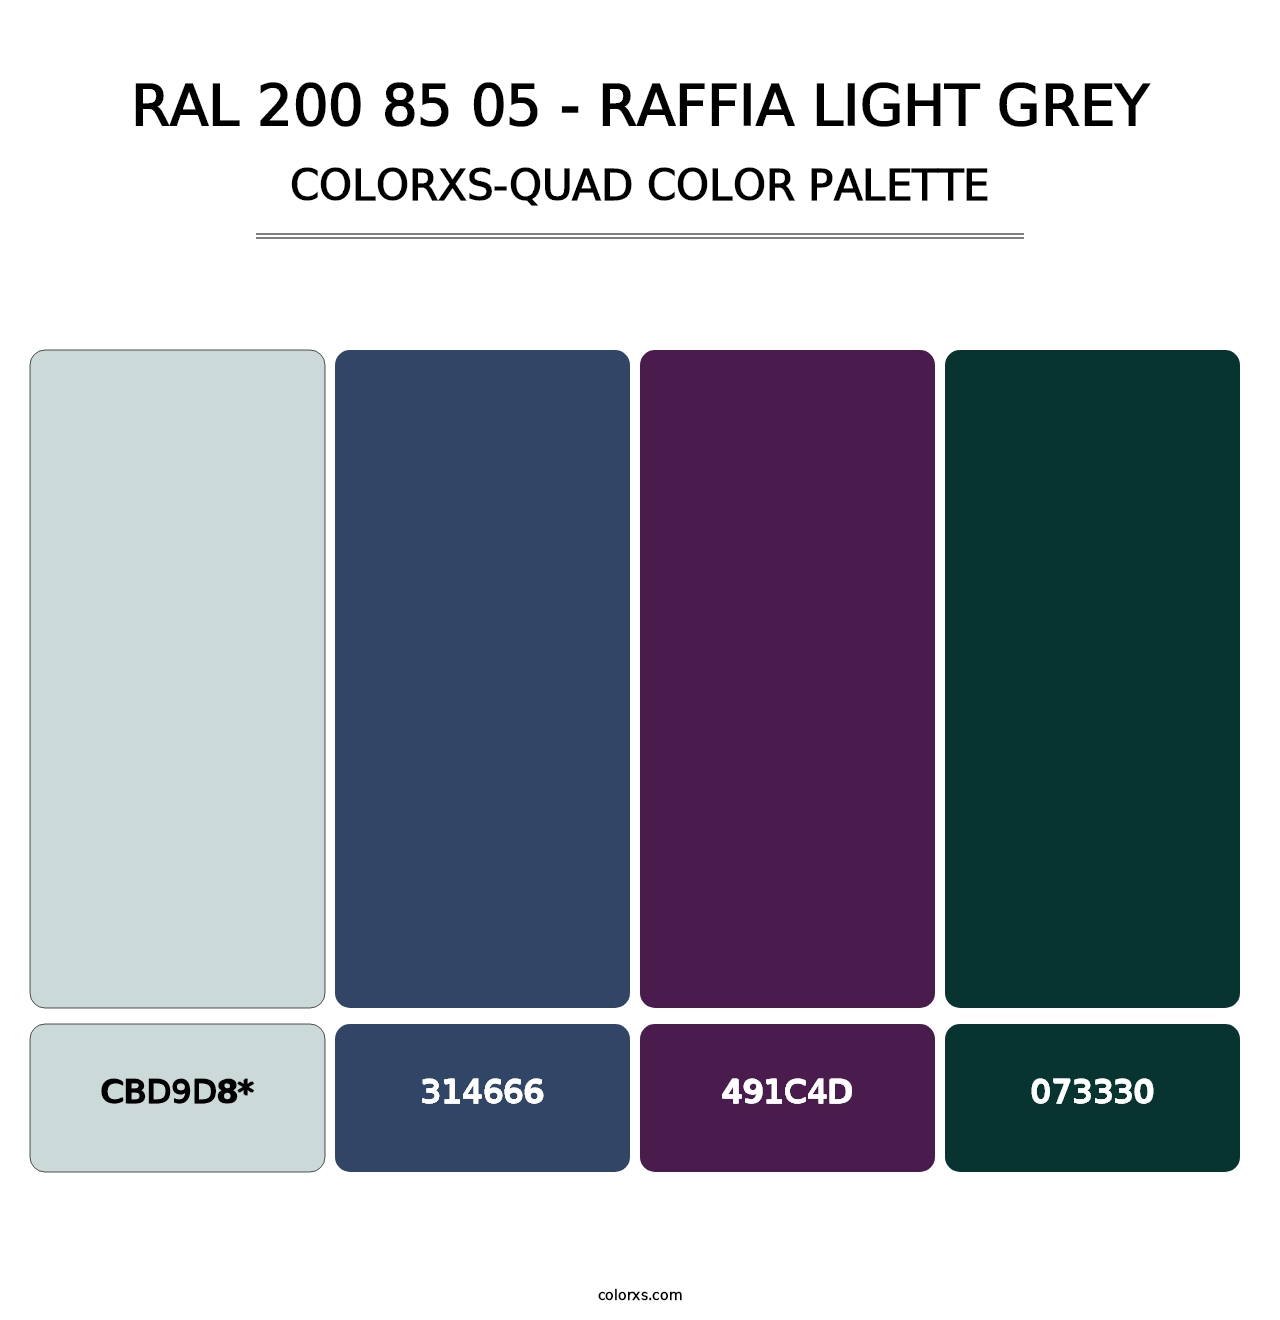 RAL 200 85 05 - Raffia Light Grey - Colorxs Quad Palette